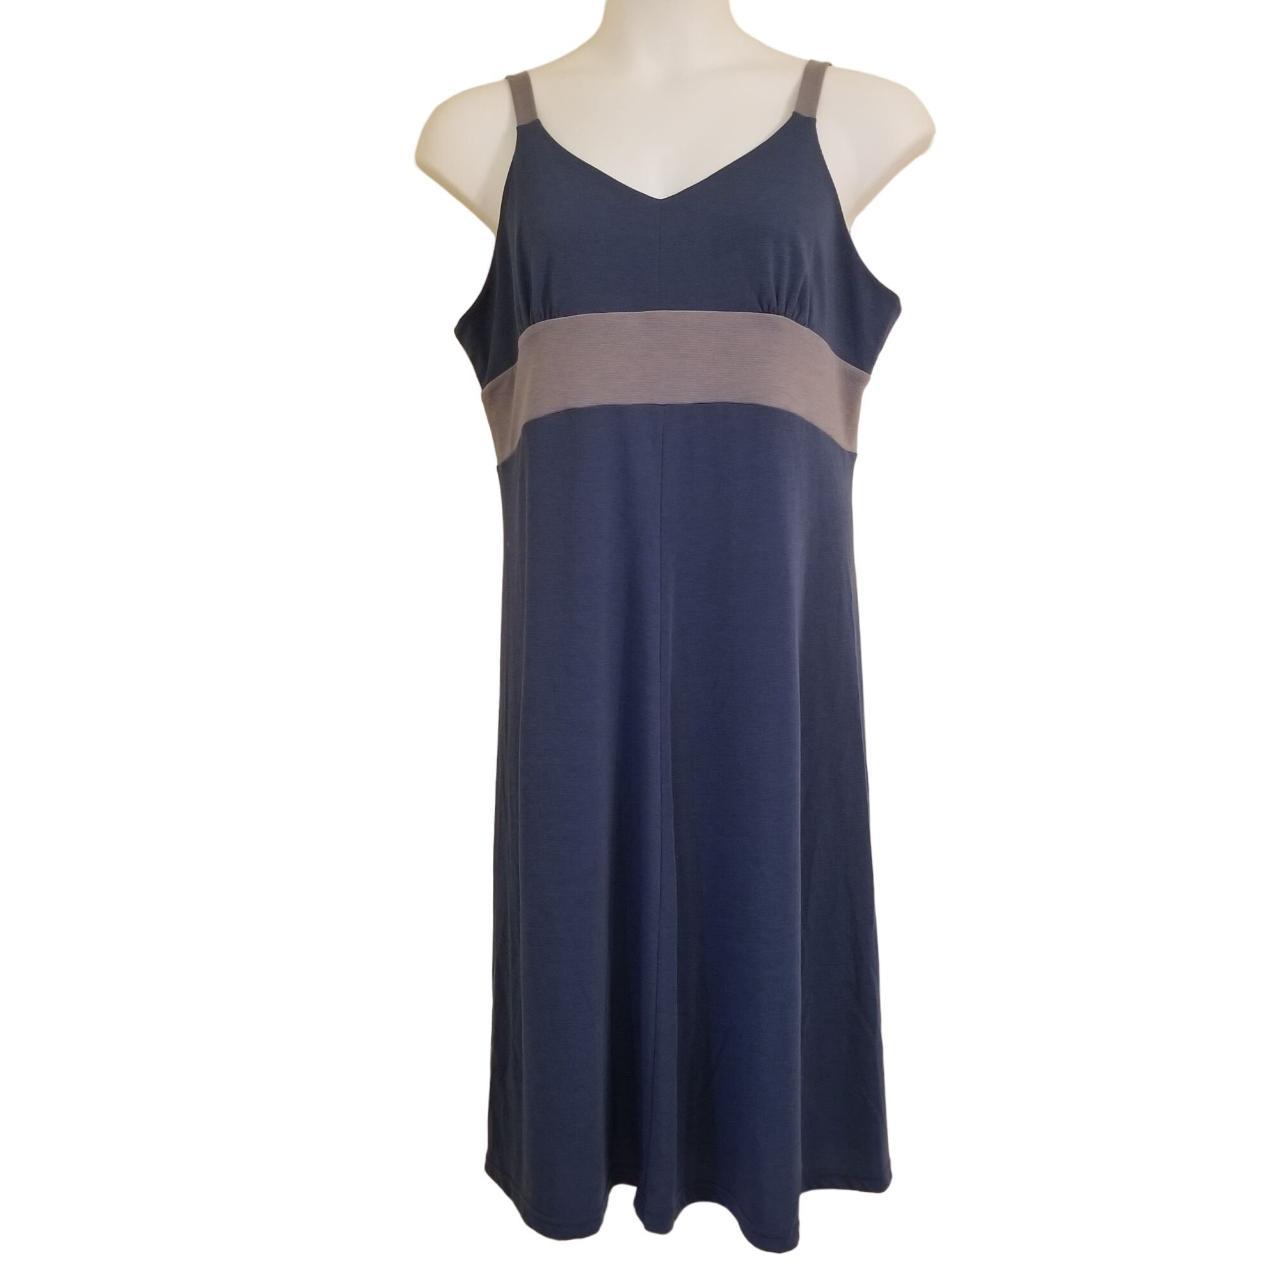 Kuhl XL Blue Gray Dress Athleisure Midi Aerosoft - Depop